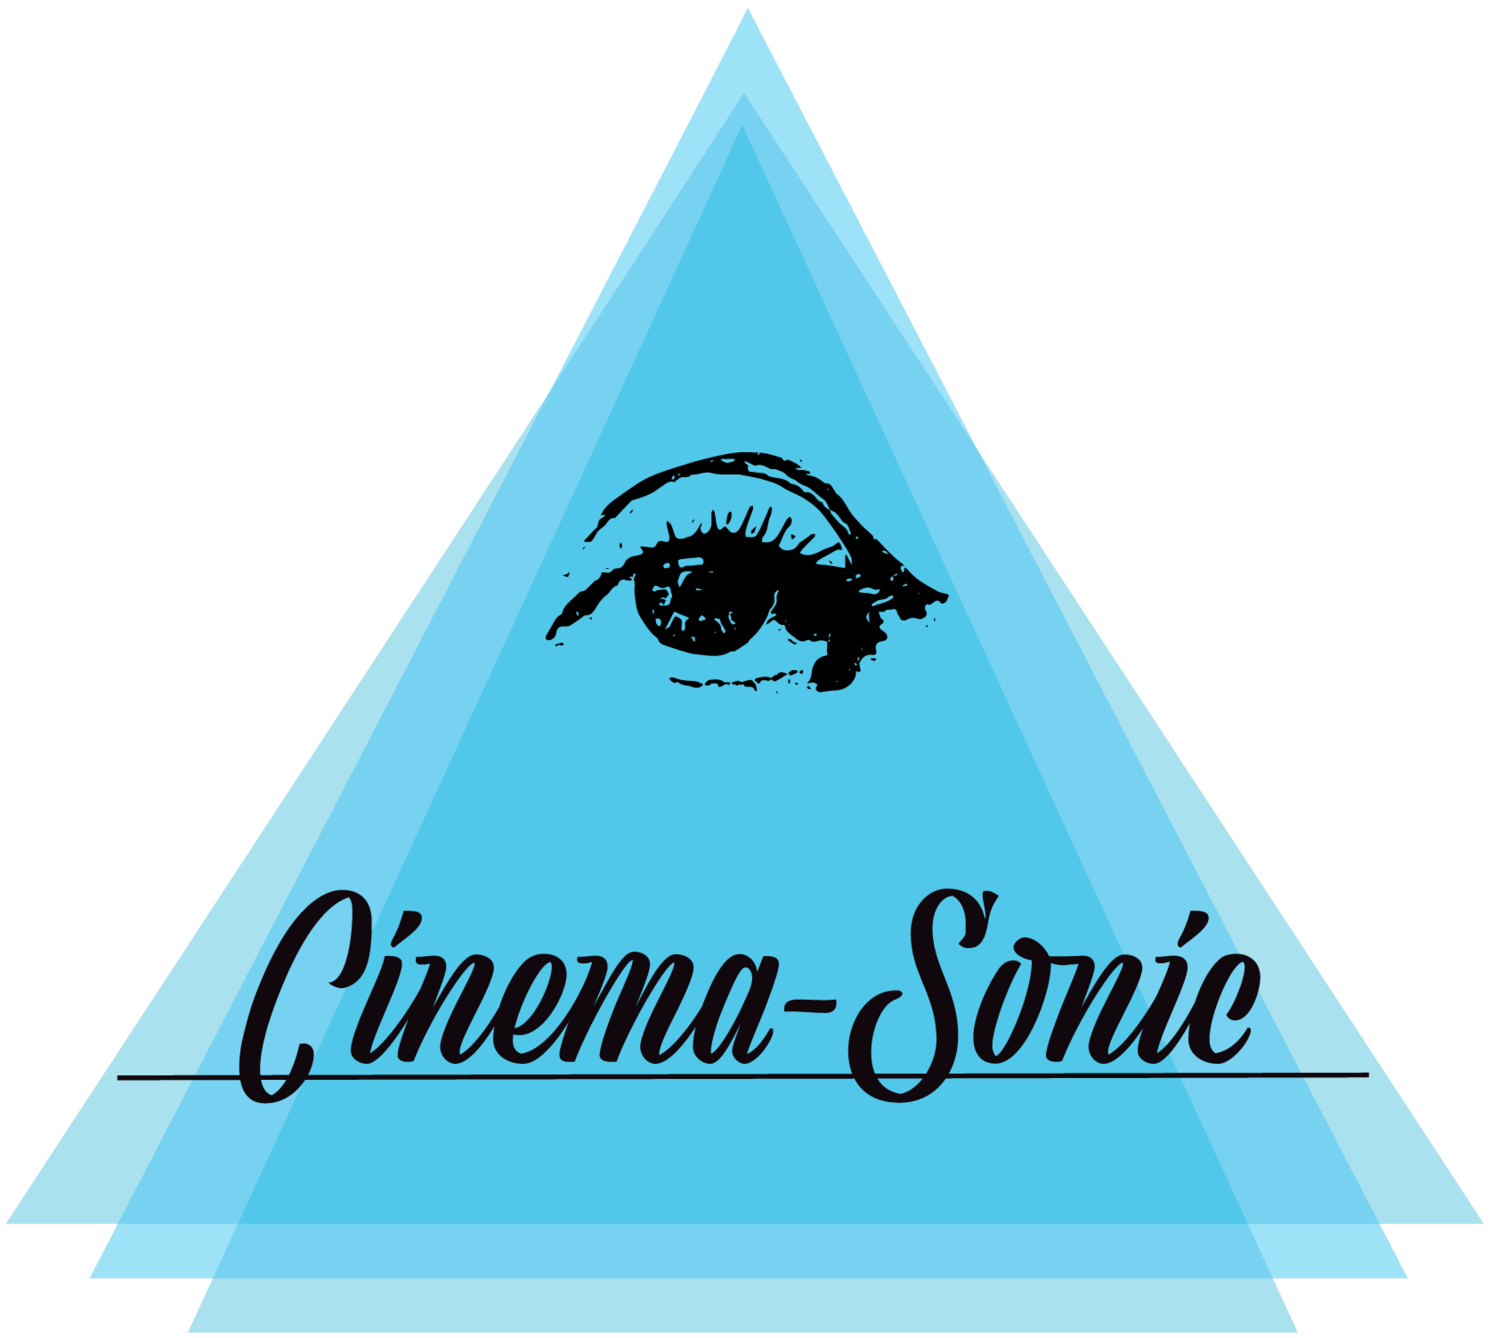 Cinema-Sonic